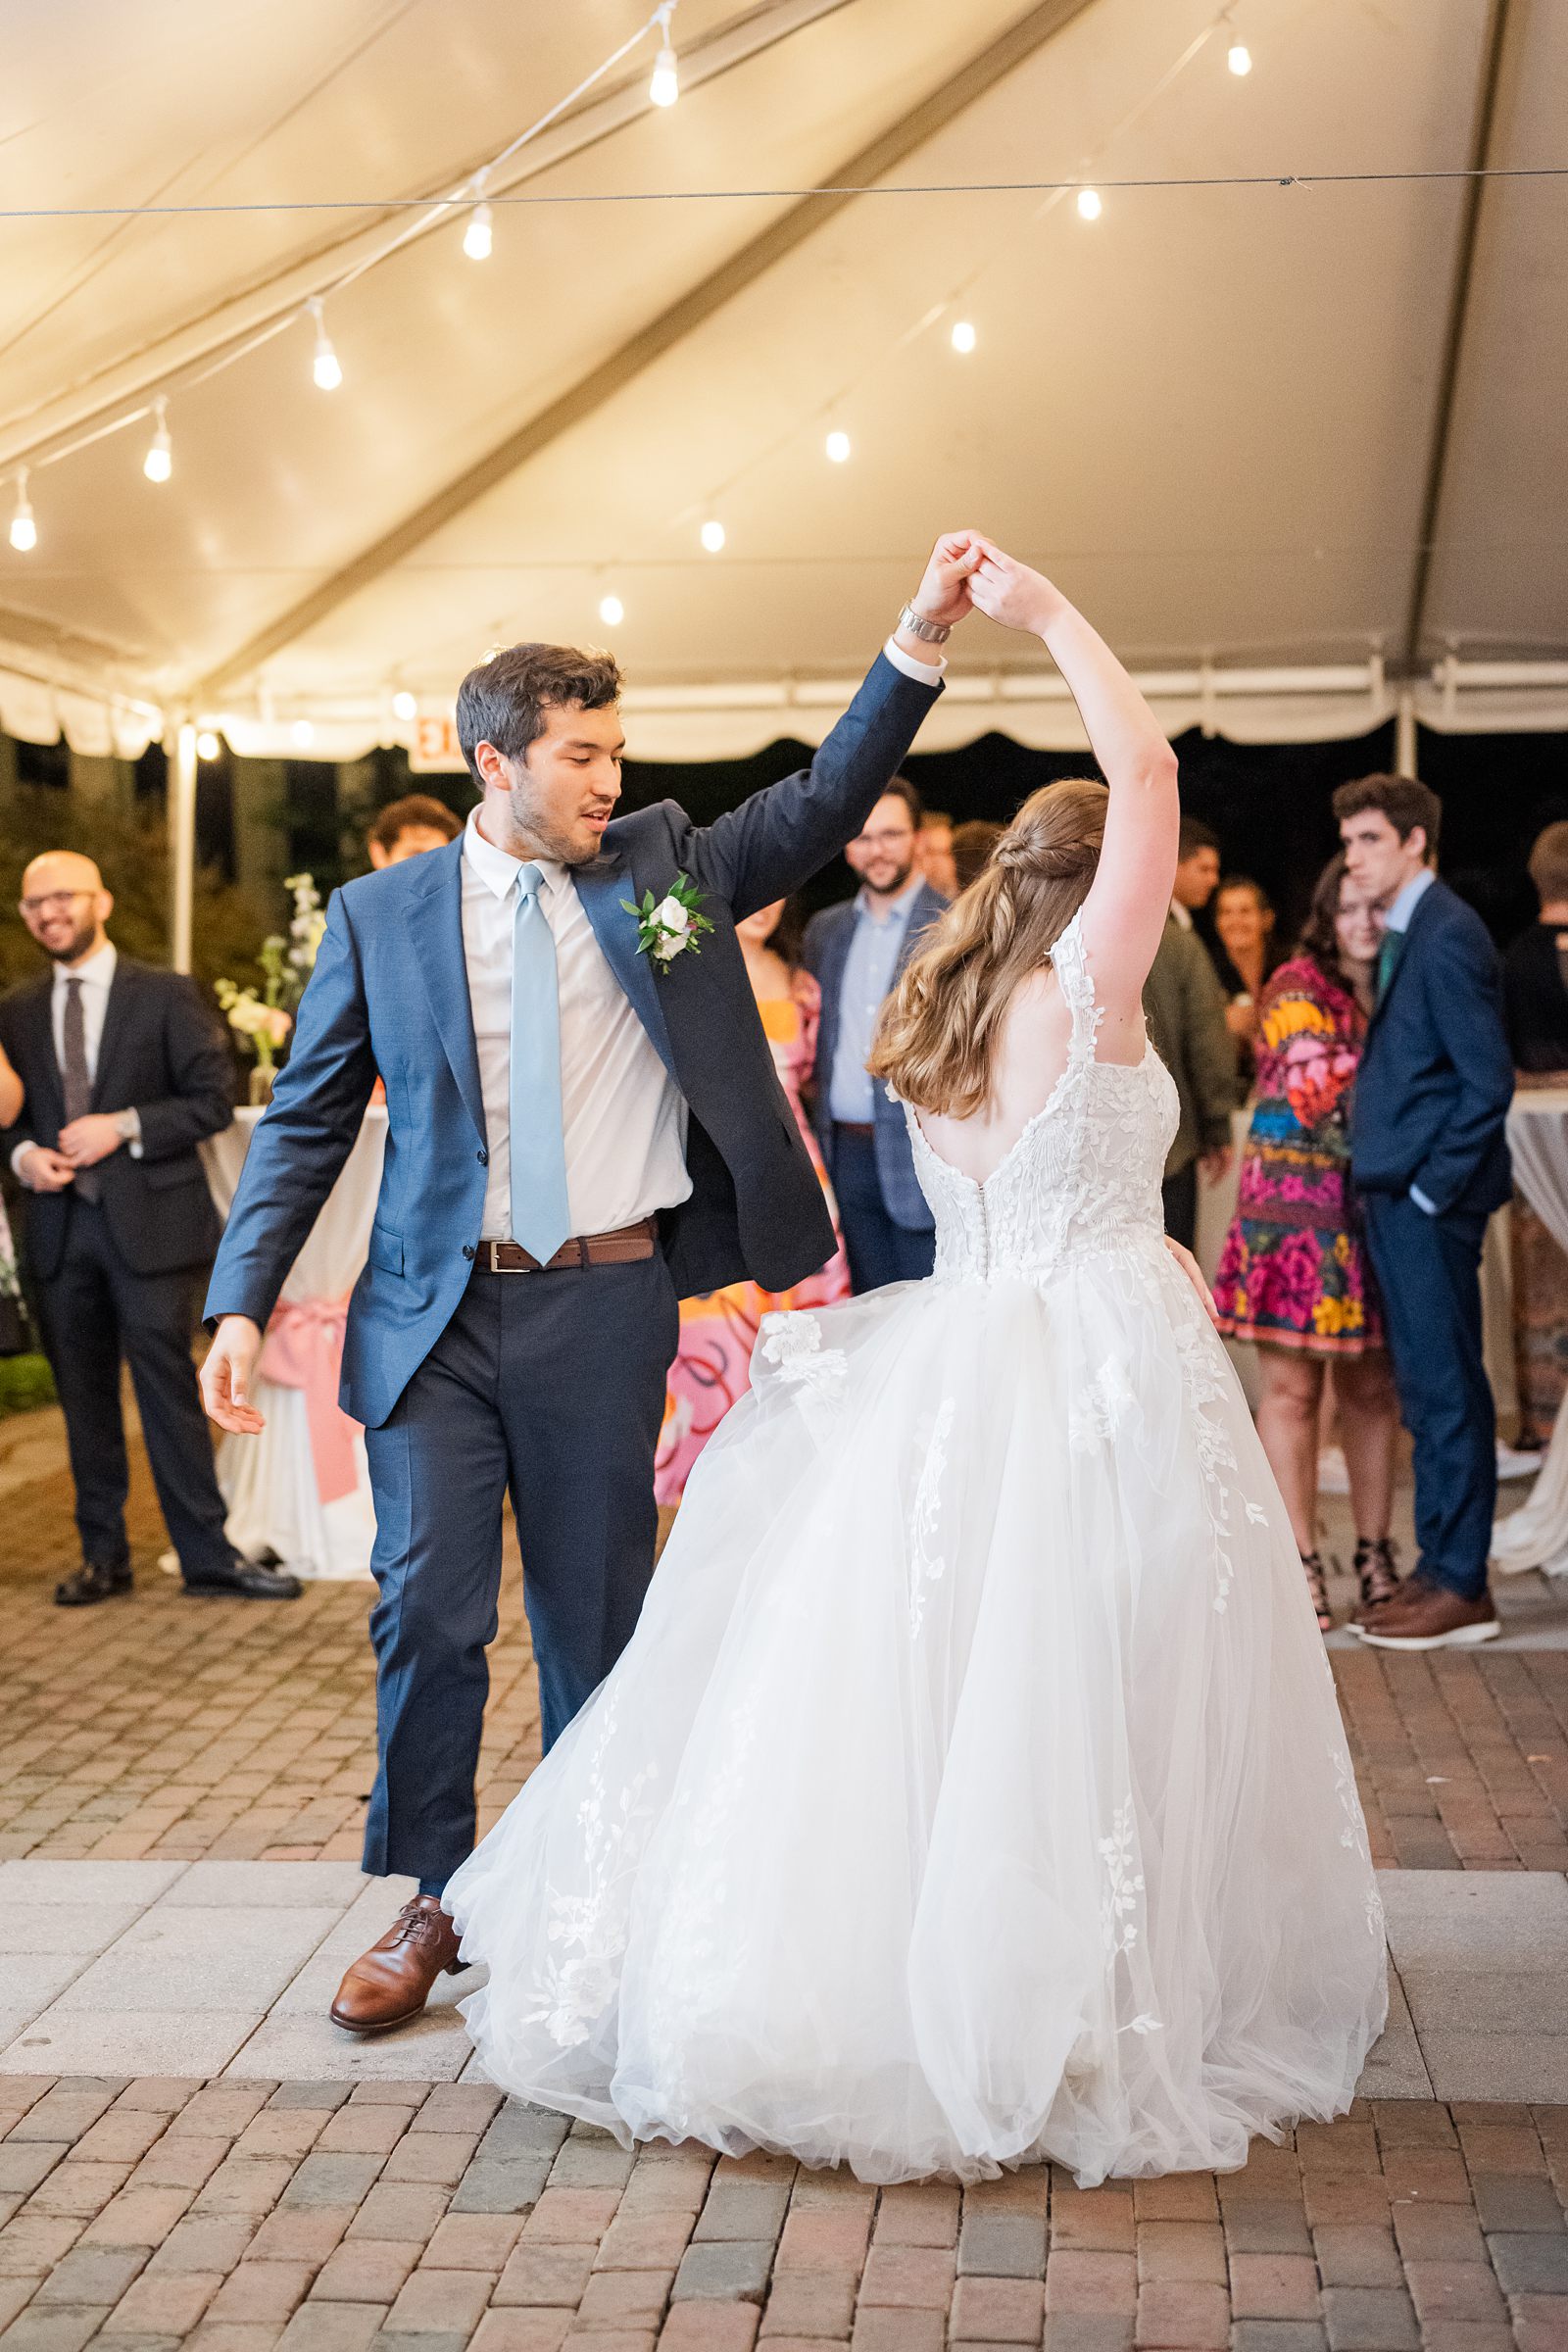 Dancing at Fall Lewis Ginter Wedding Reception